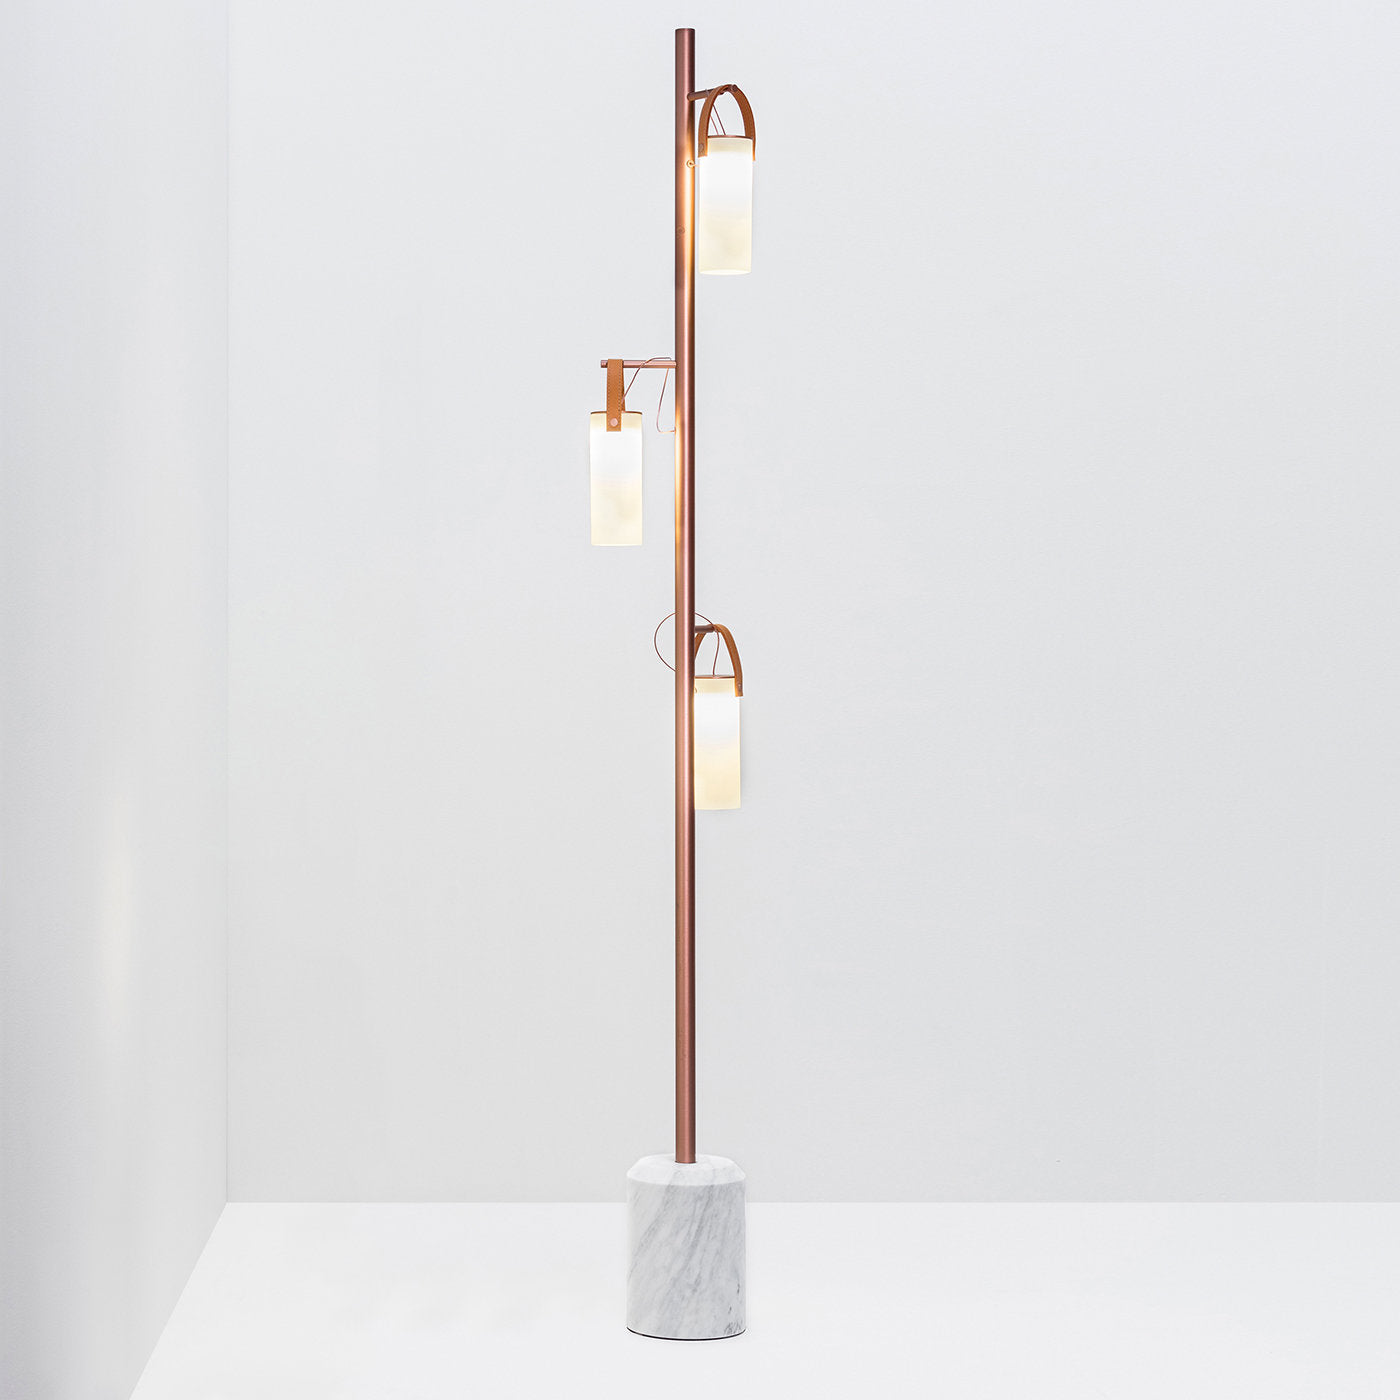 Galerie 3-Diffuser Floor Lamp by Federico Peri - Alternative view 2